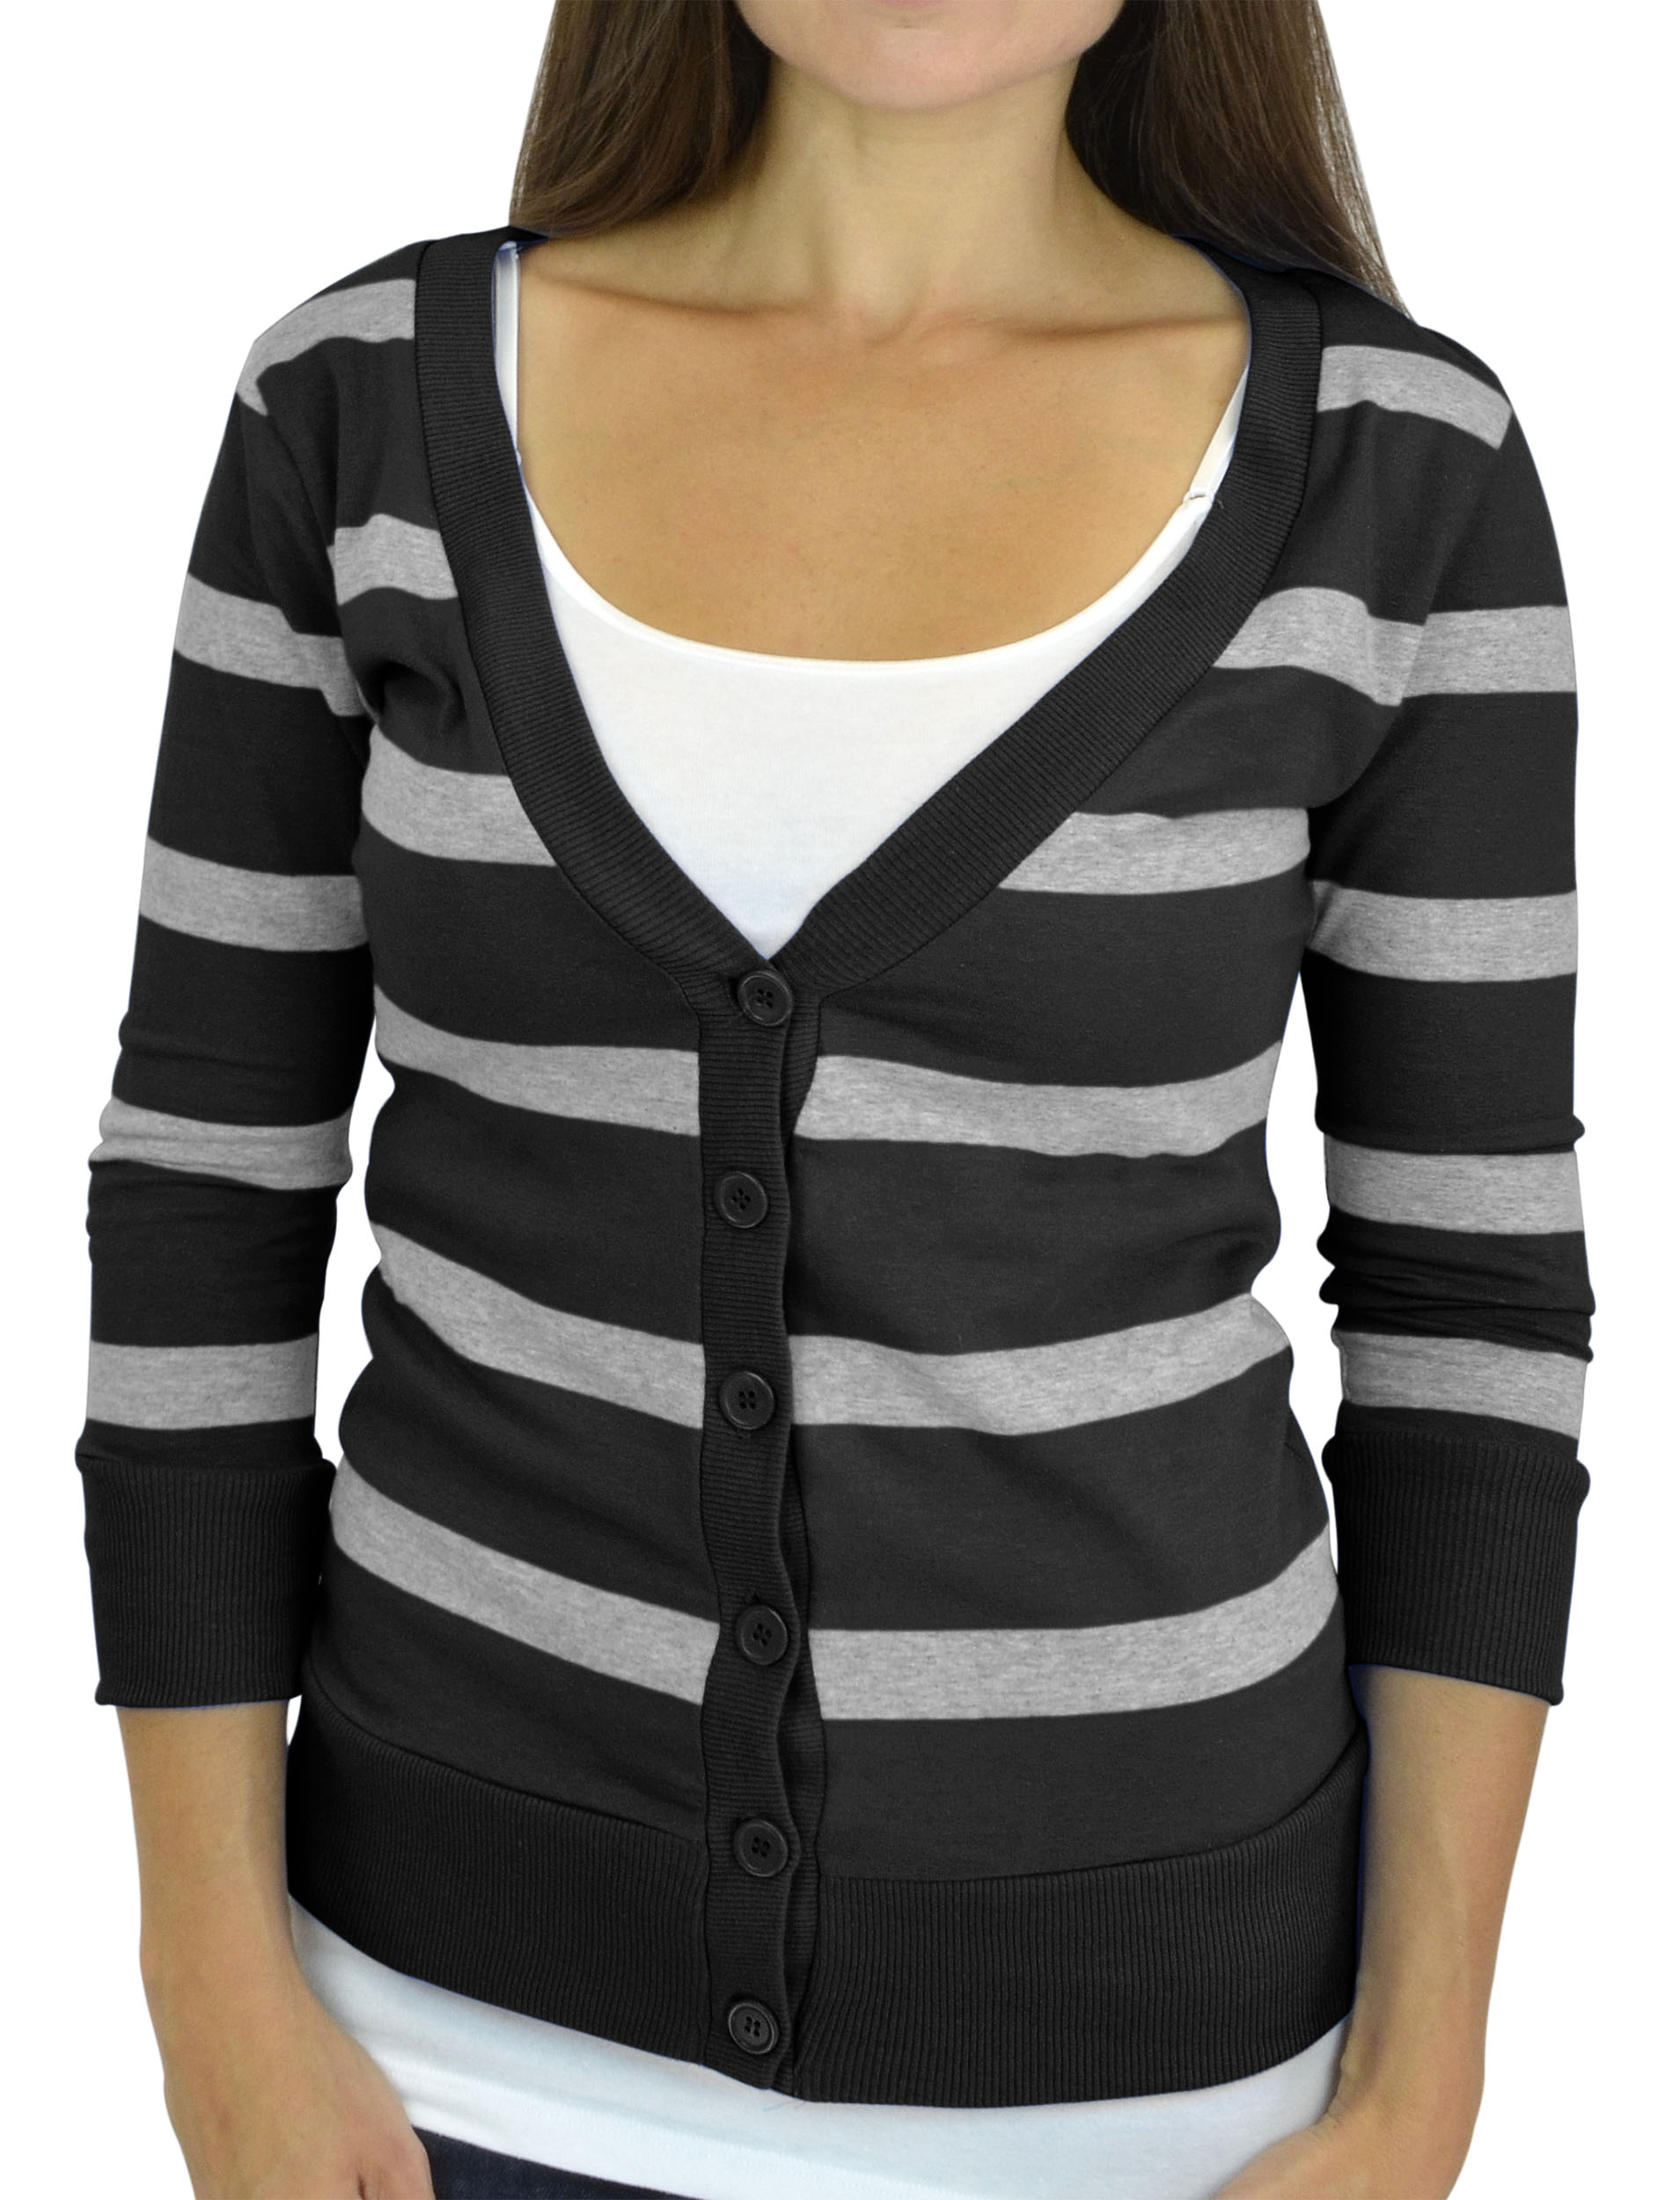 Belle Donne - Women / Girl Junior Size Soft 3/4 Sleeve V-Neck Sweater Cardigans - Charcoal/Medium